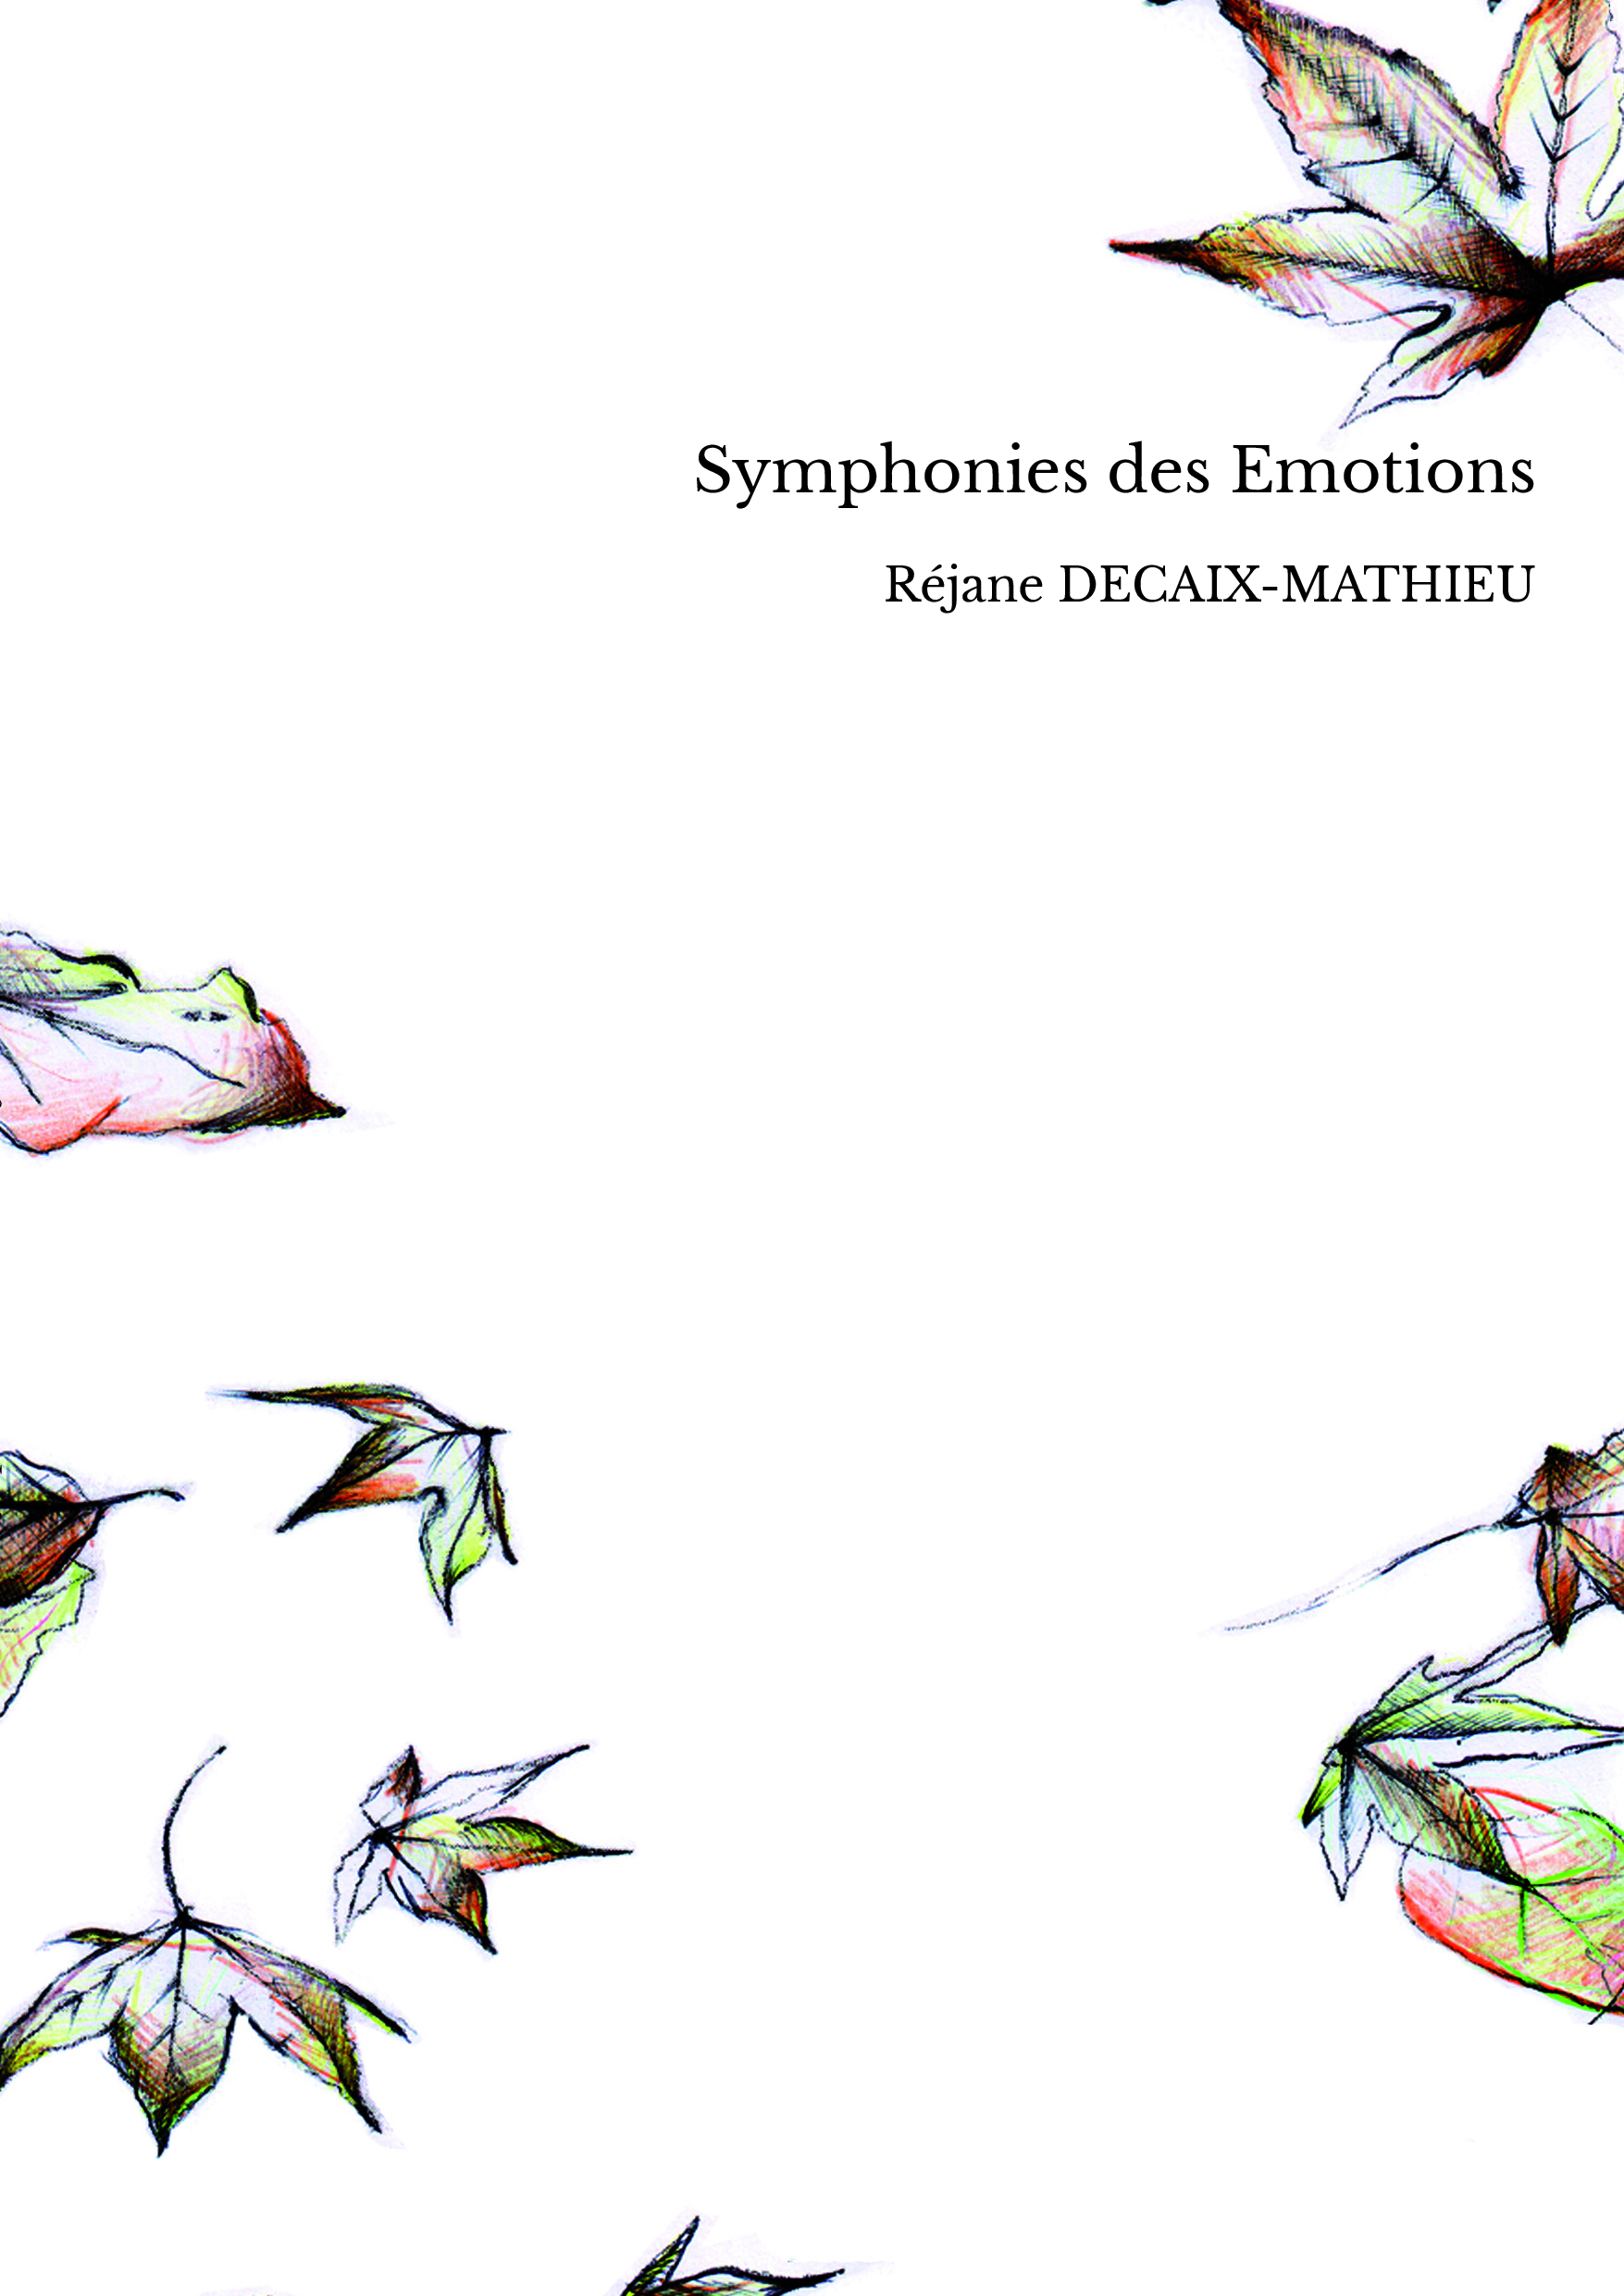 Symphonies des Emotions